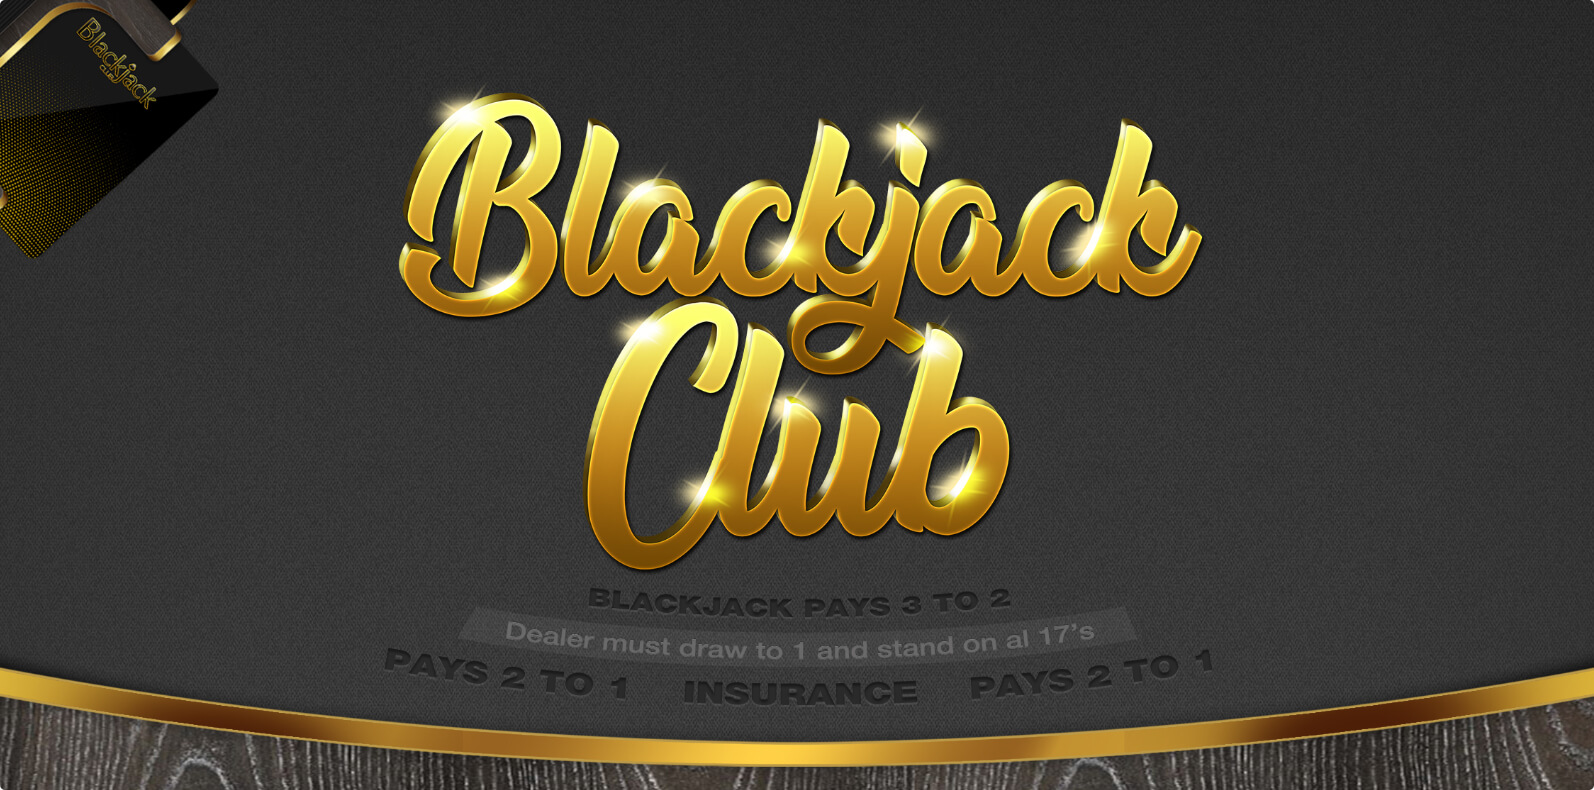 Blackjack Club cards game design and development